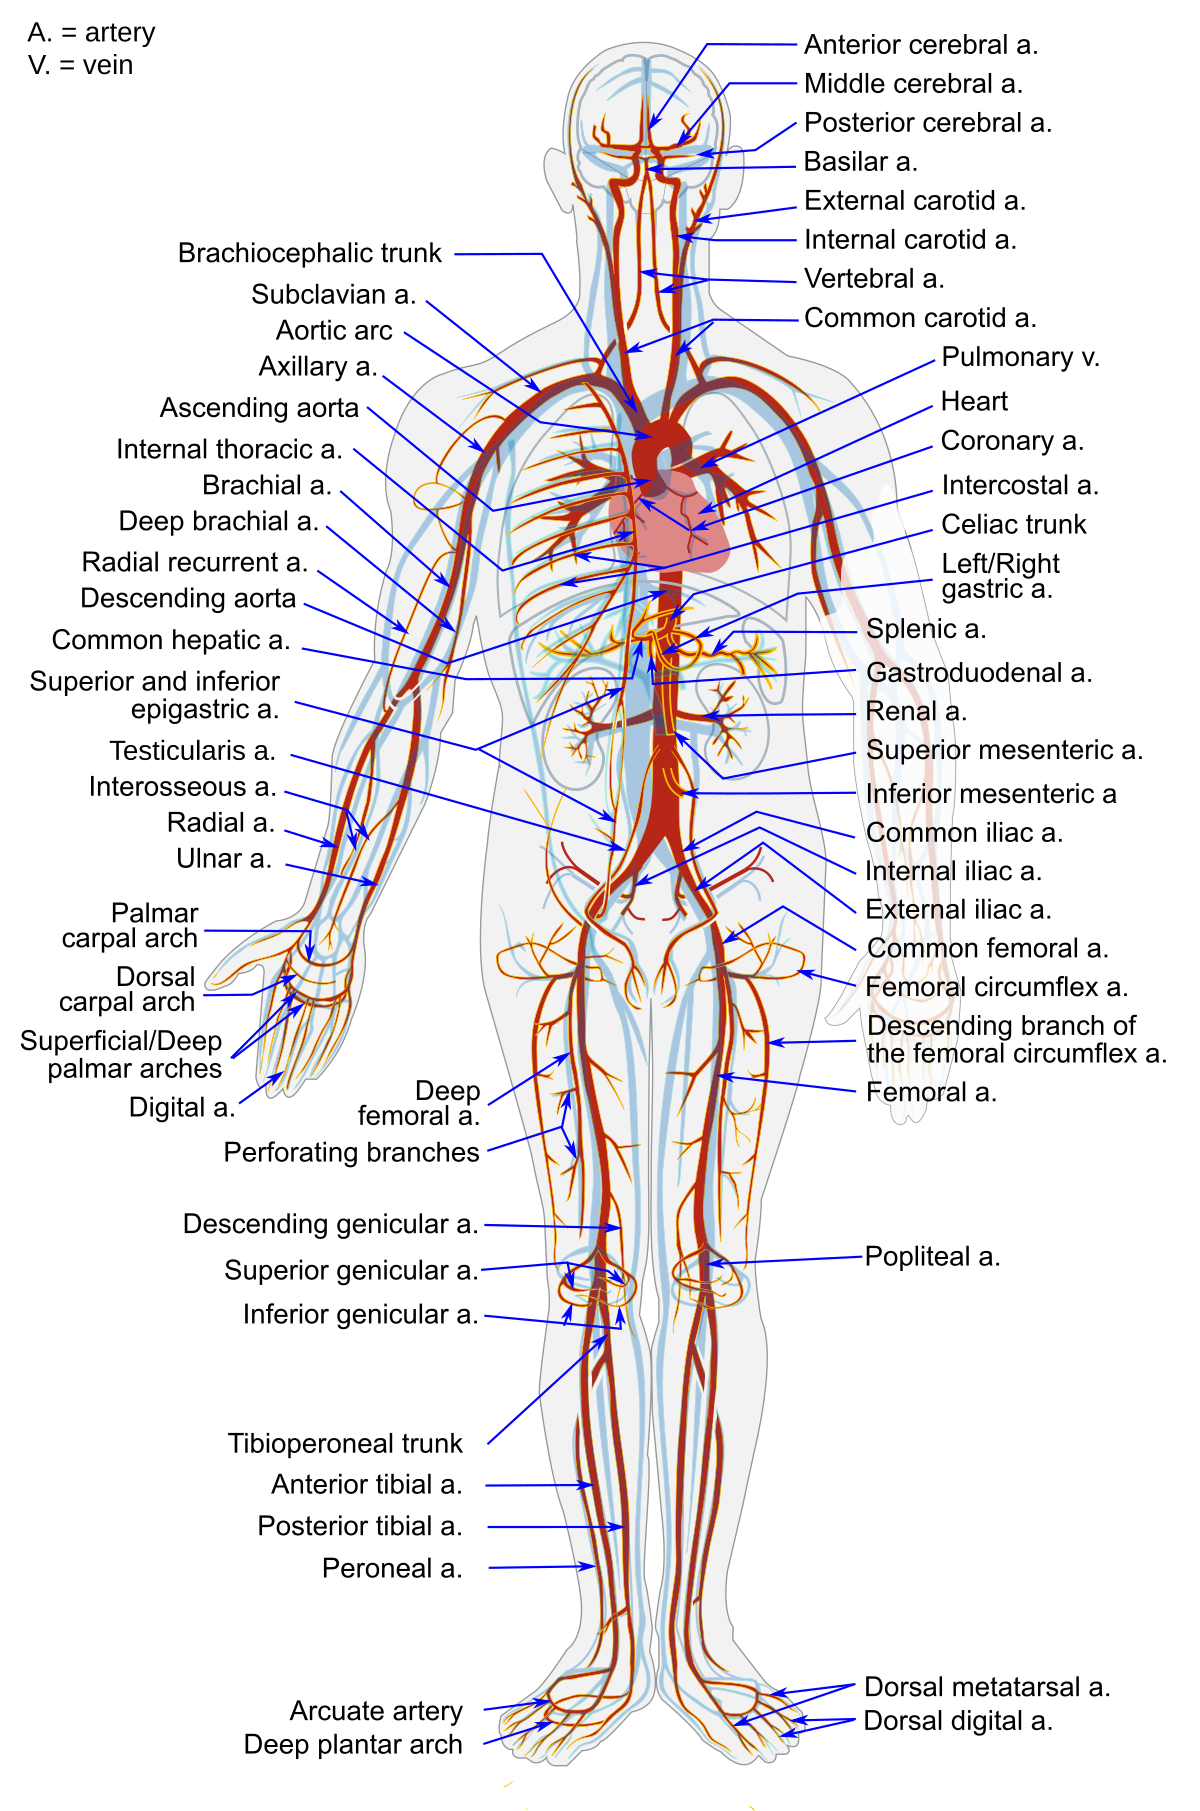 Arterial System en.svg